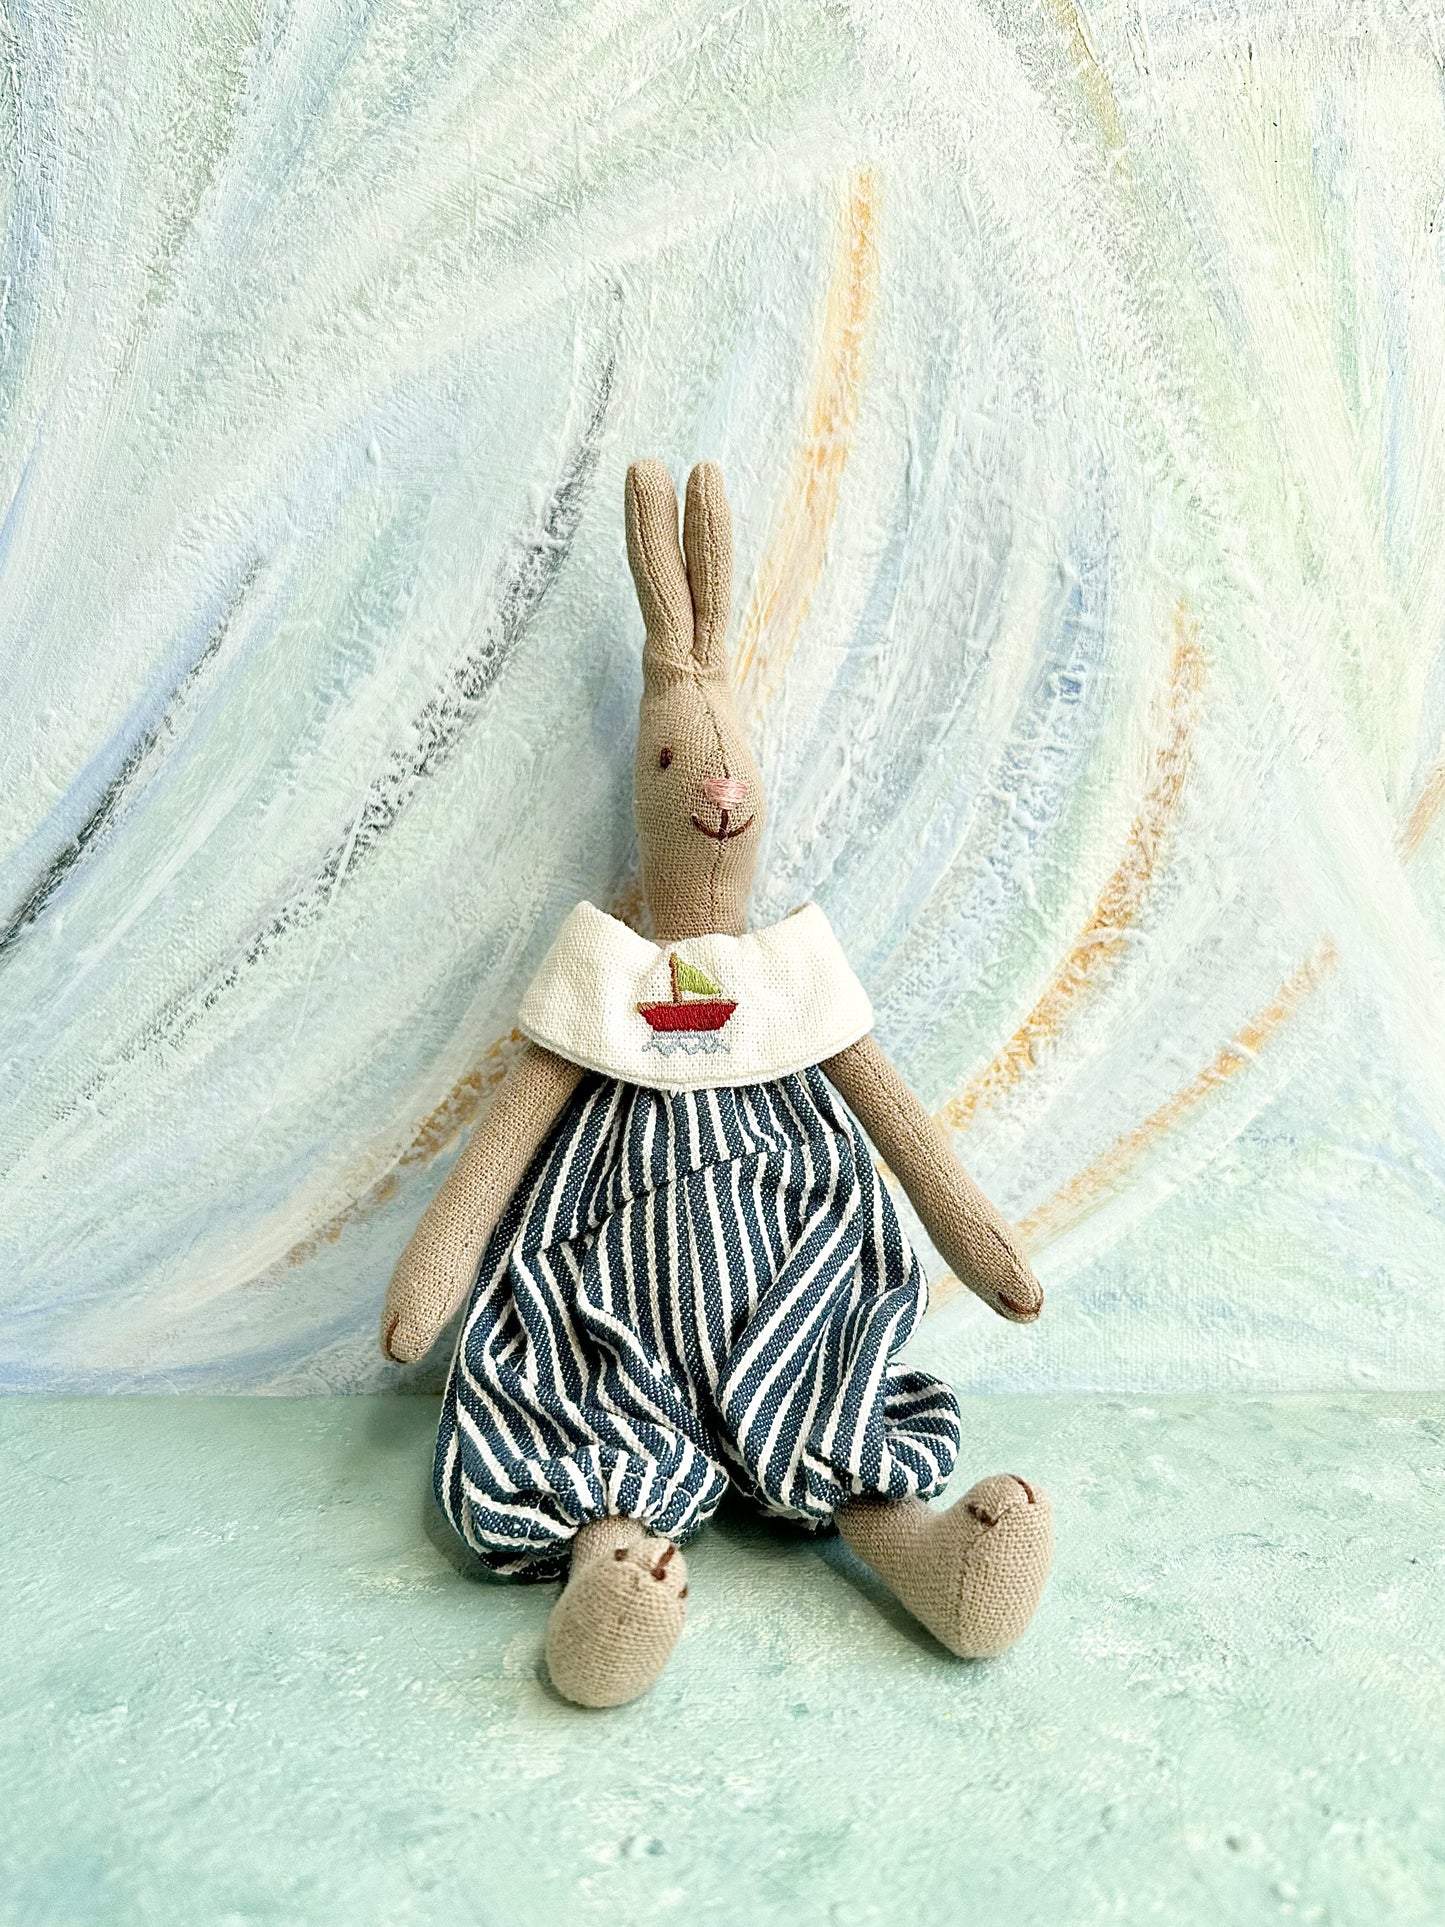 Baby/Small Rabbit - 2003